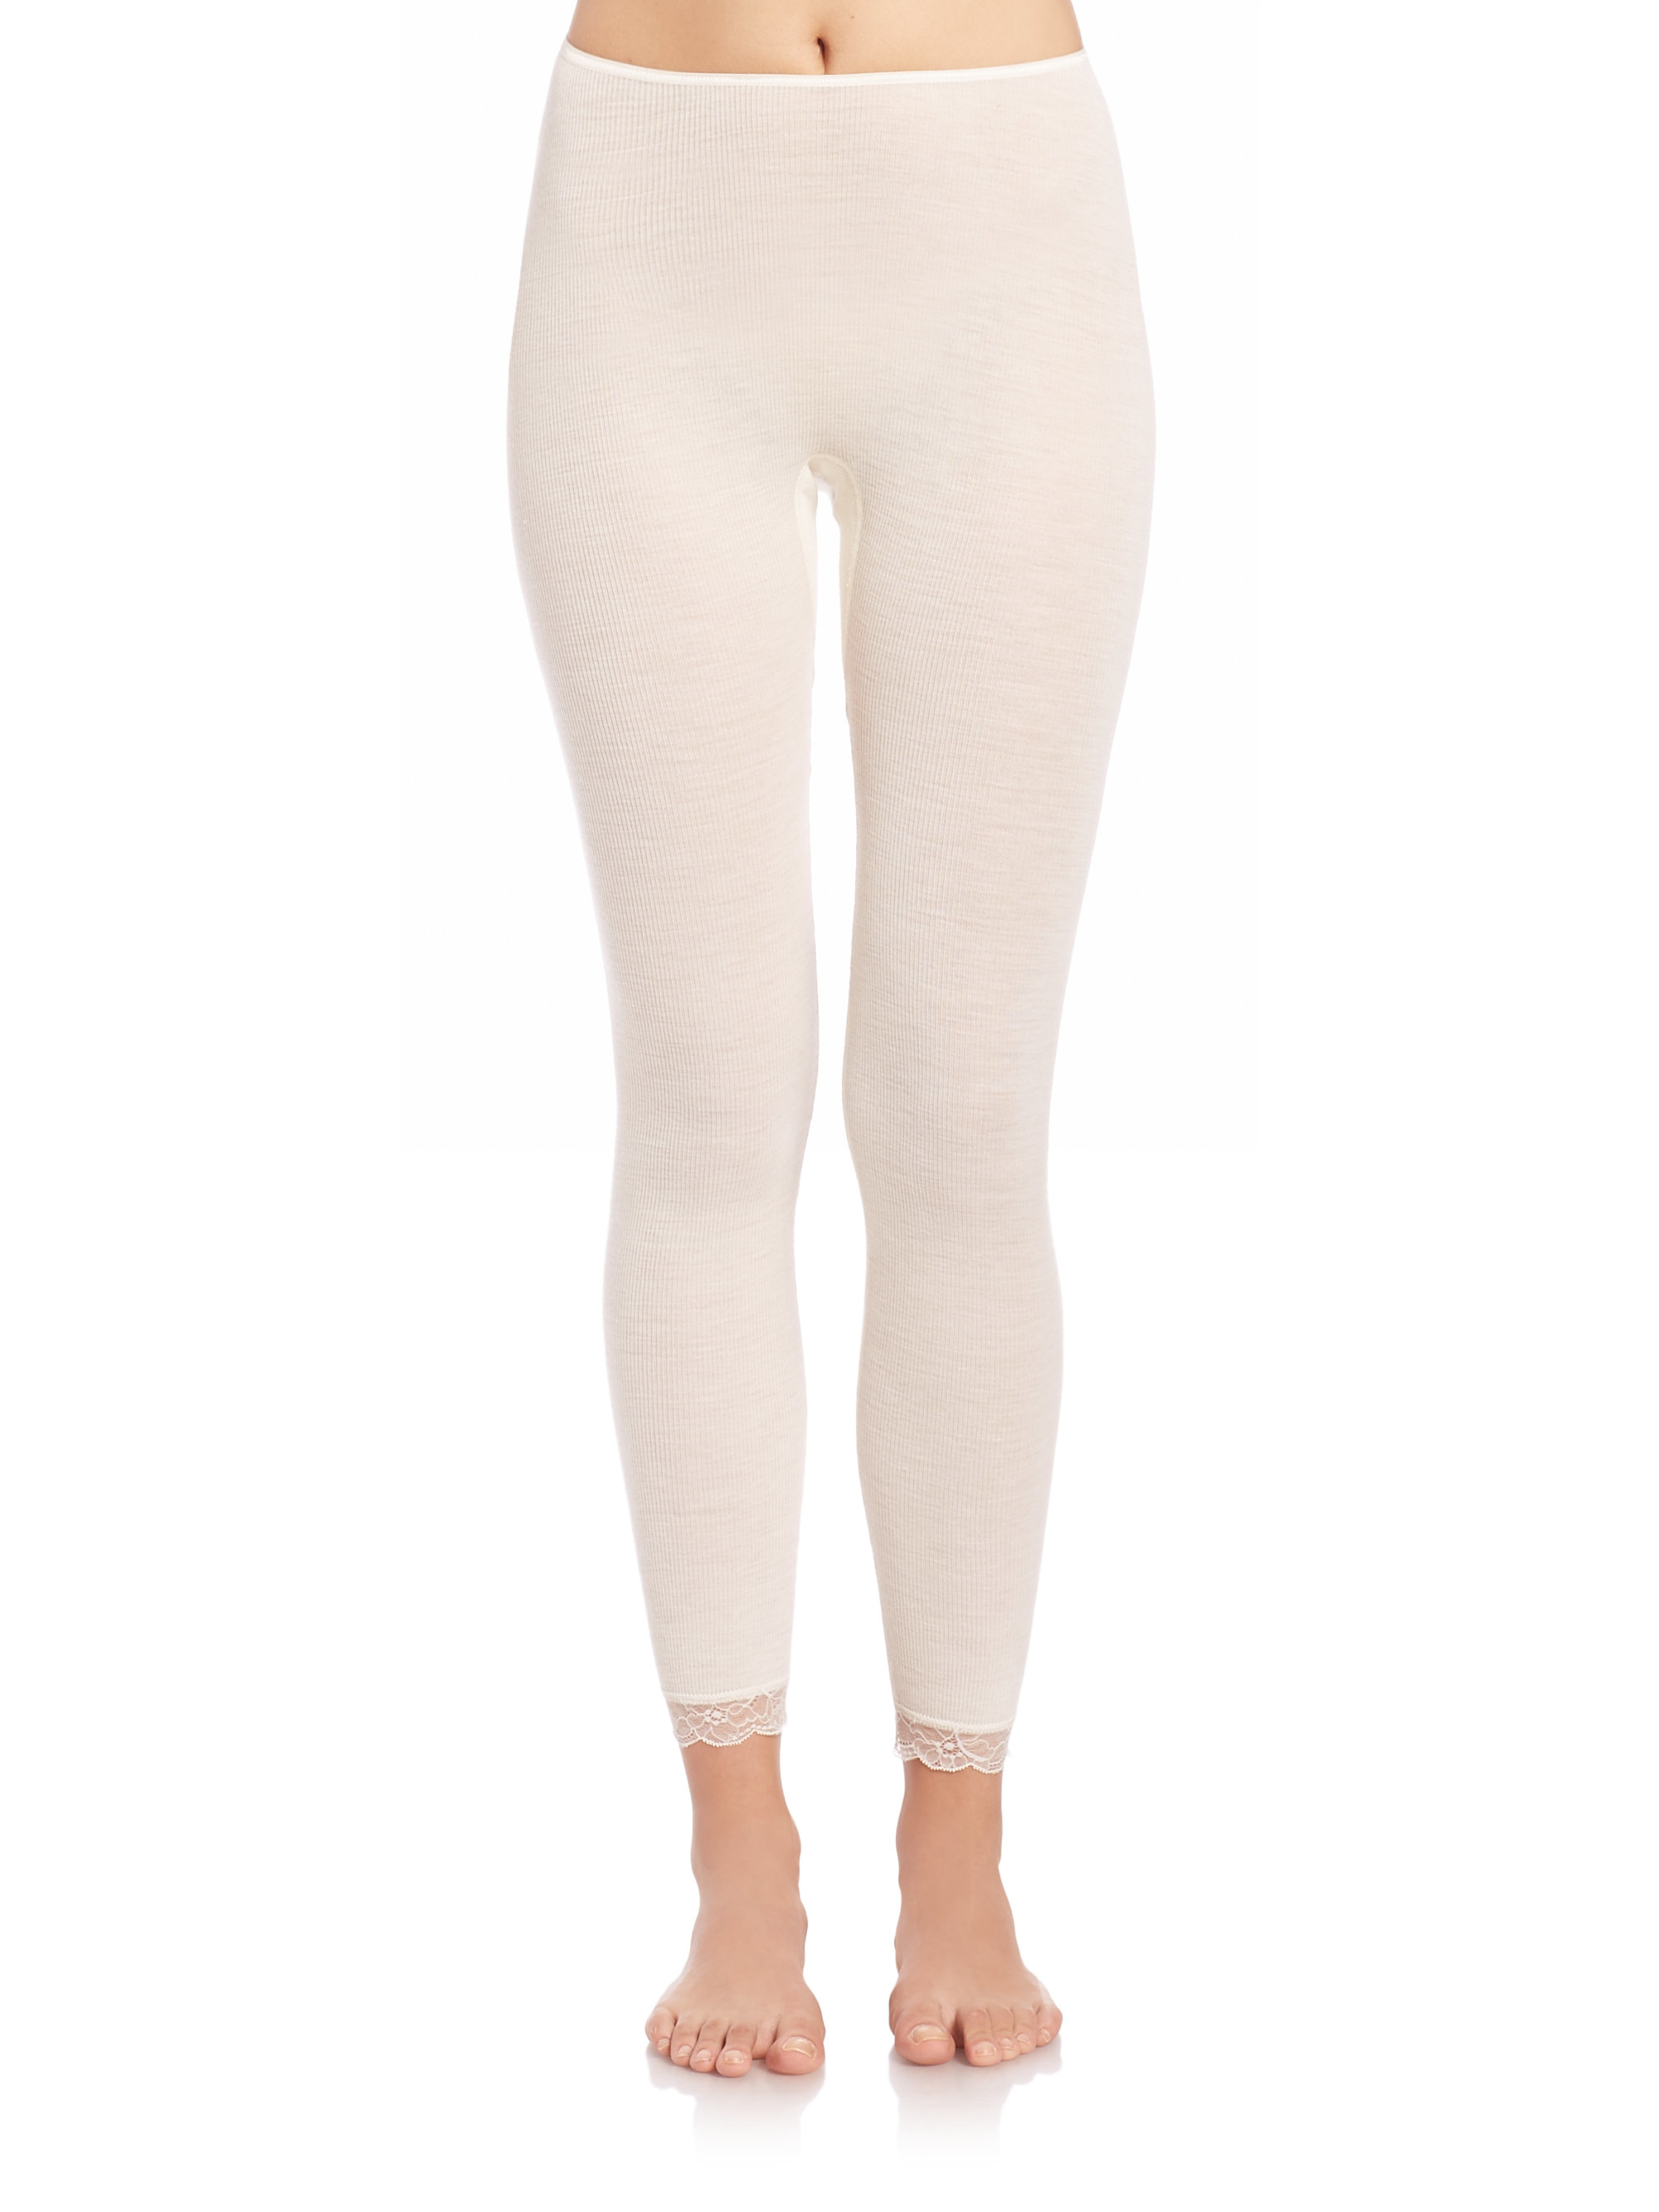 https://cdnc.lystit.com/photos/8e84-2015/09/23/hanro-pale-cream-woolen-lace-leggings-beige-product-0-411956031-normal.jpeg